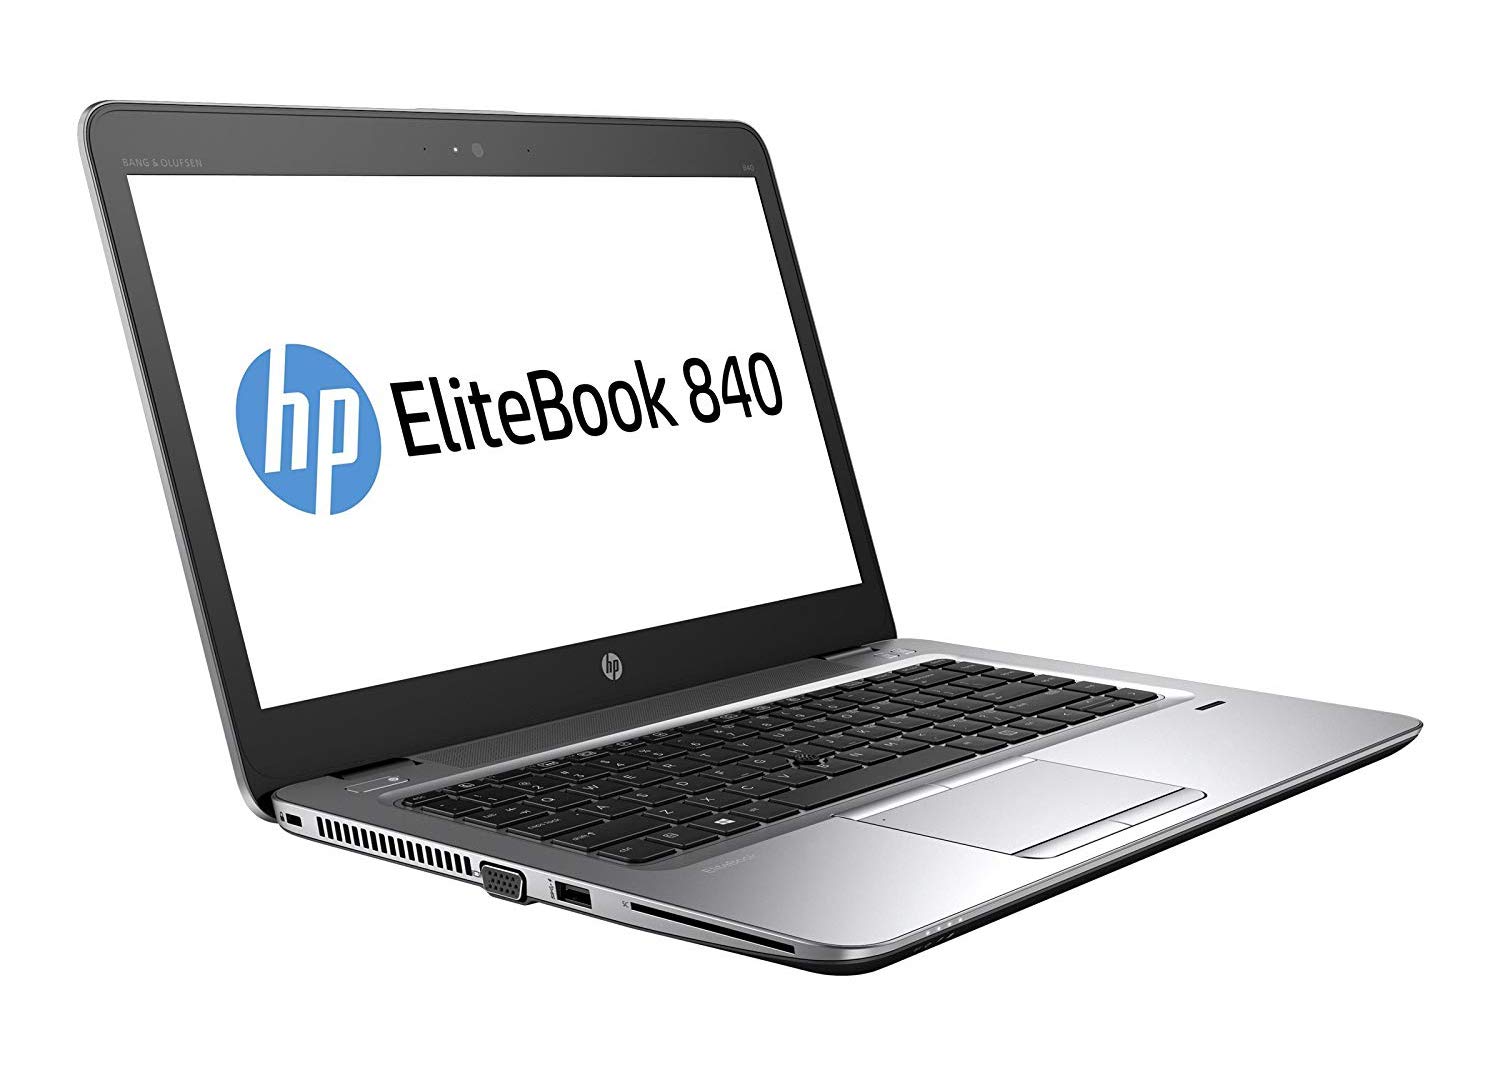 Portátil Ultrabook HP Elitebook 840 G3 TACTIL GRADO B con teclado castellano (Intel Core i5 6200U 2.3Ghz/8GB/240SSD-M.2/14FHD/NO-DVD/W10P) Preinstala